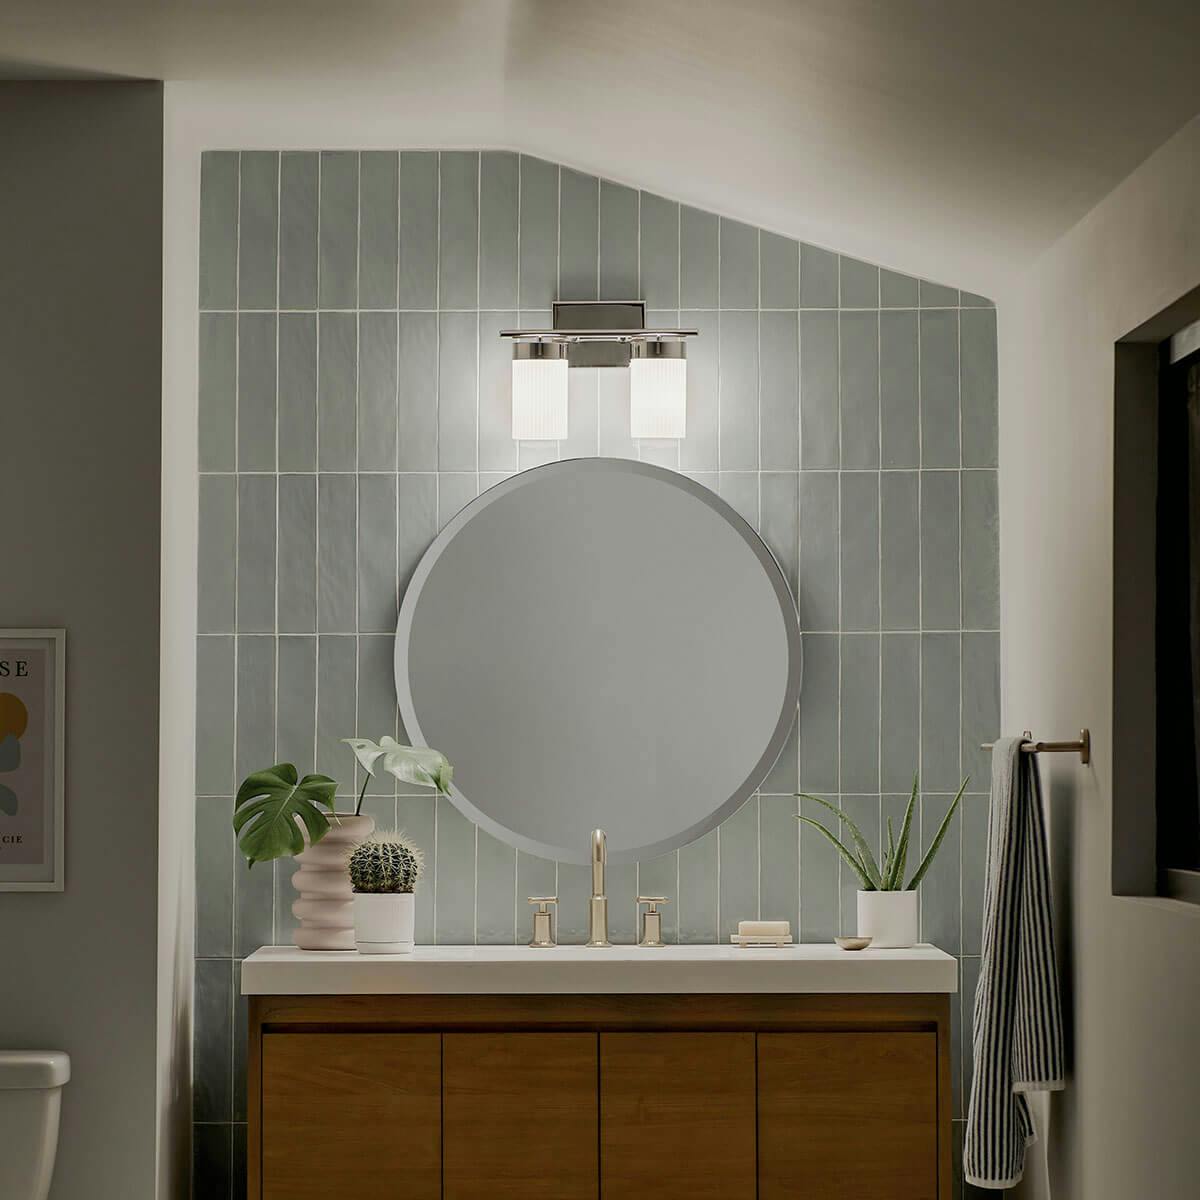 Night time Bathroom image featuring Cosabella vanity light 55111PN